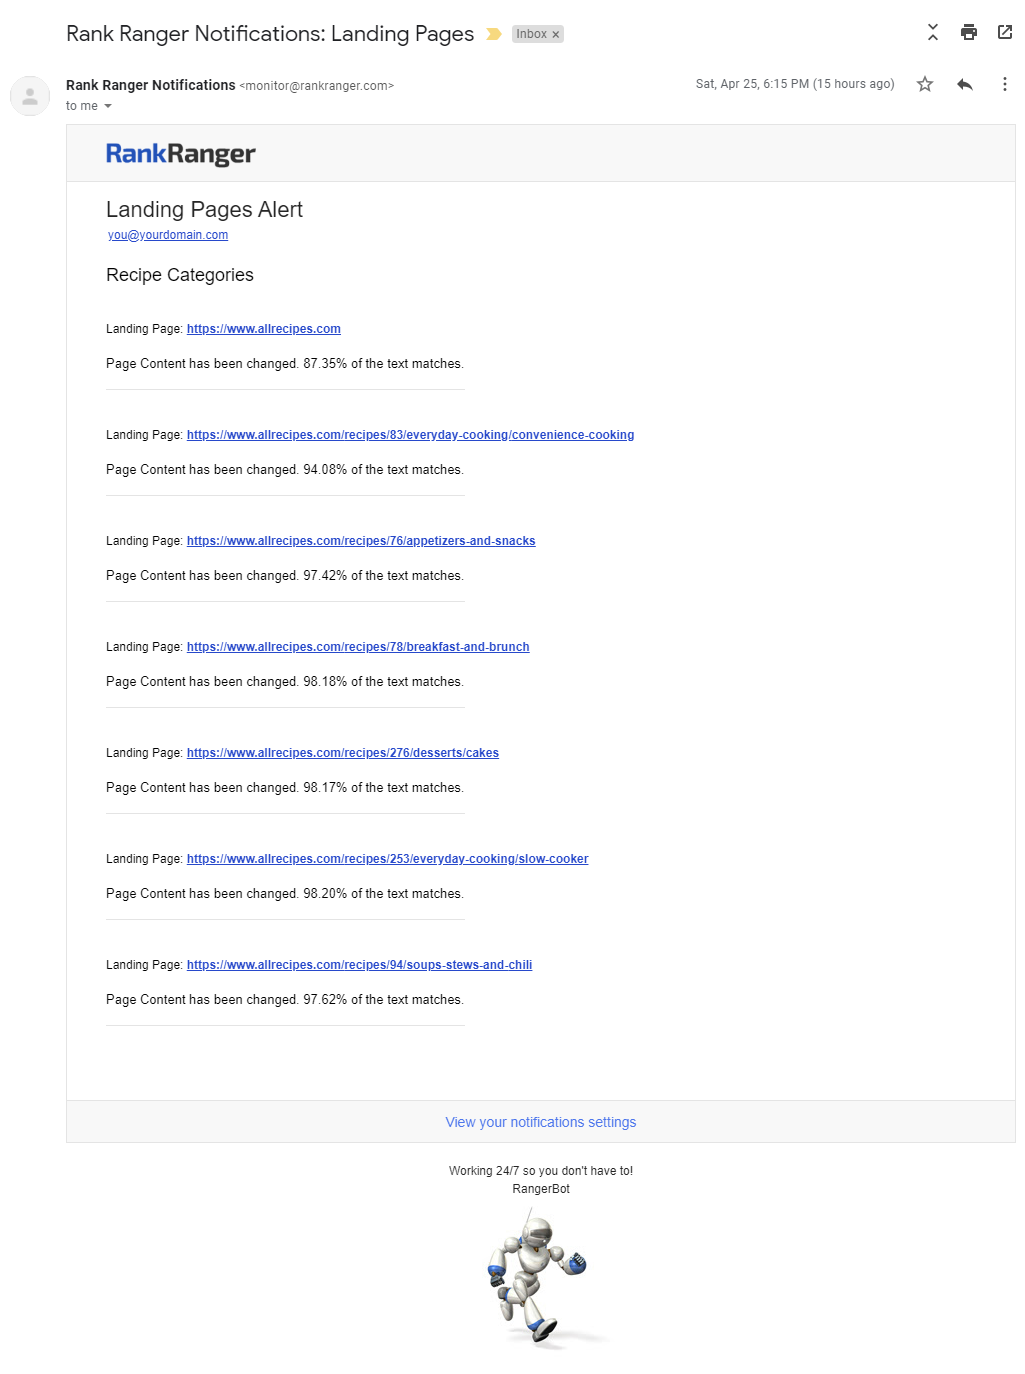 Landing Page Content Change alert